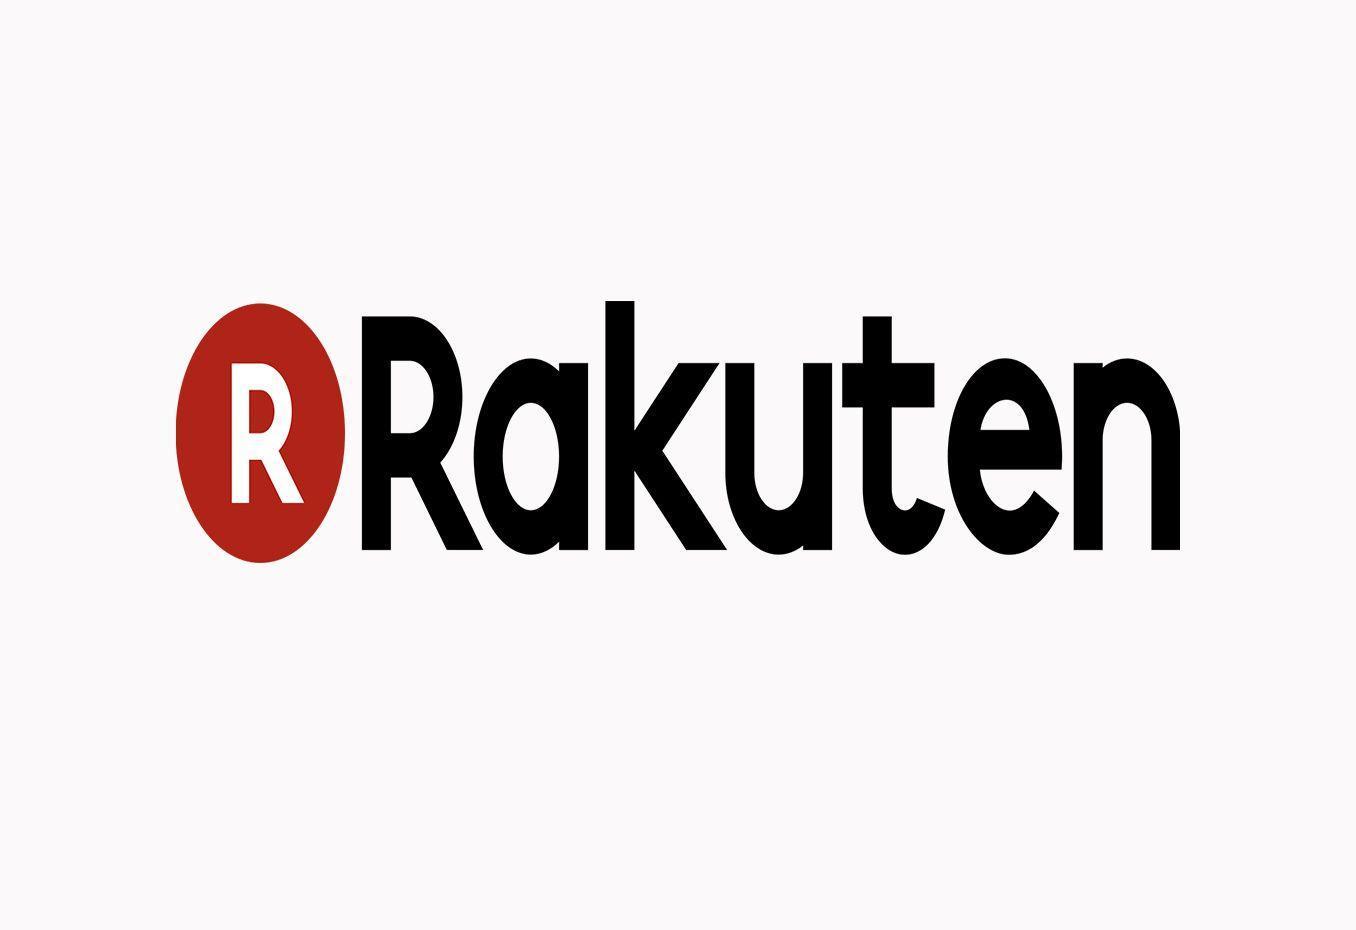 Rakuten Logo - The growth of Rakuten in Brazil and LATAM as sponsor of FC Barcelona